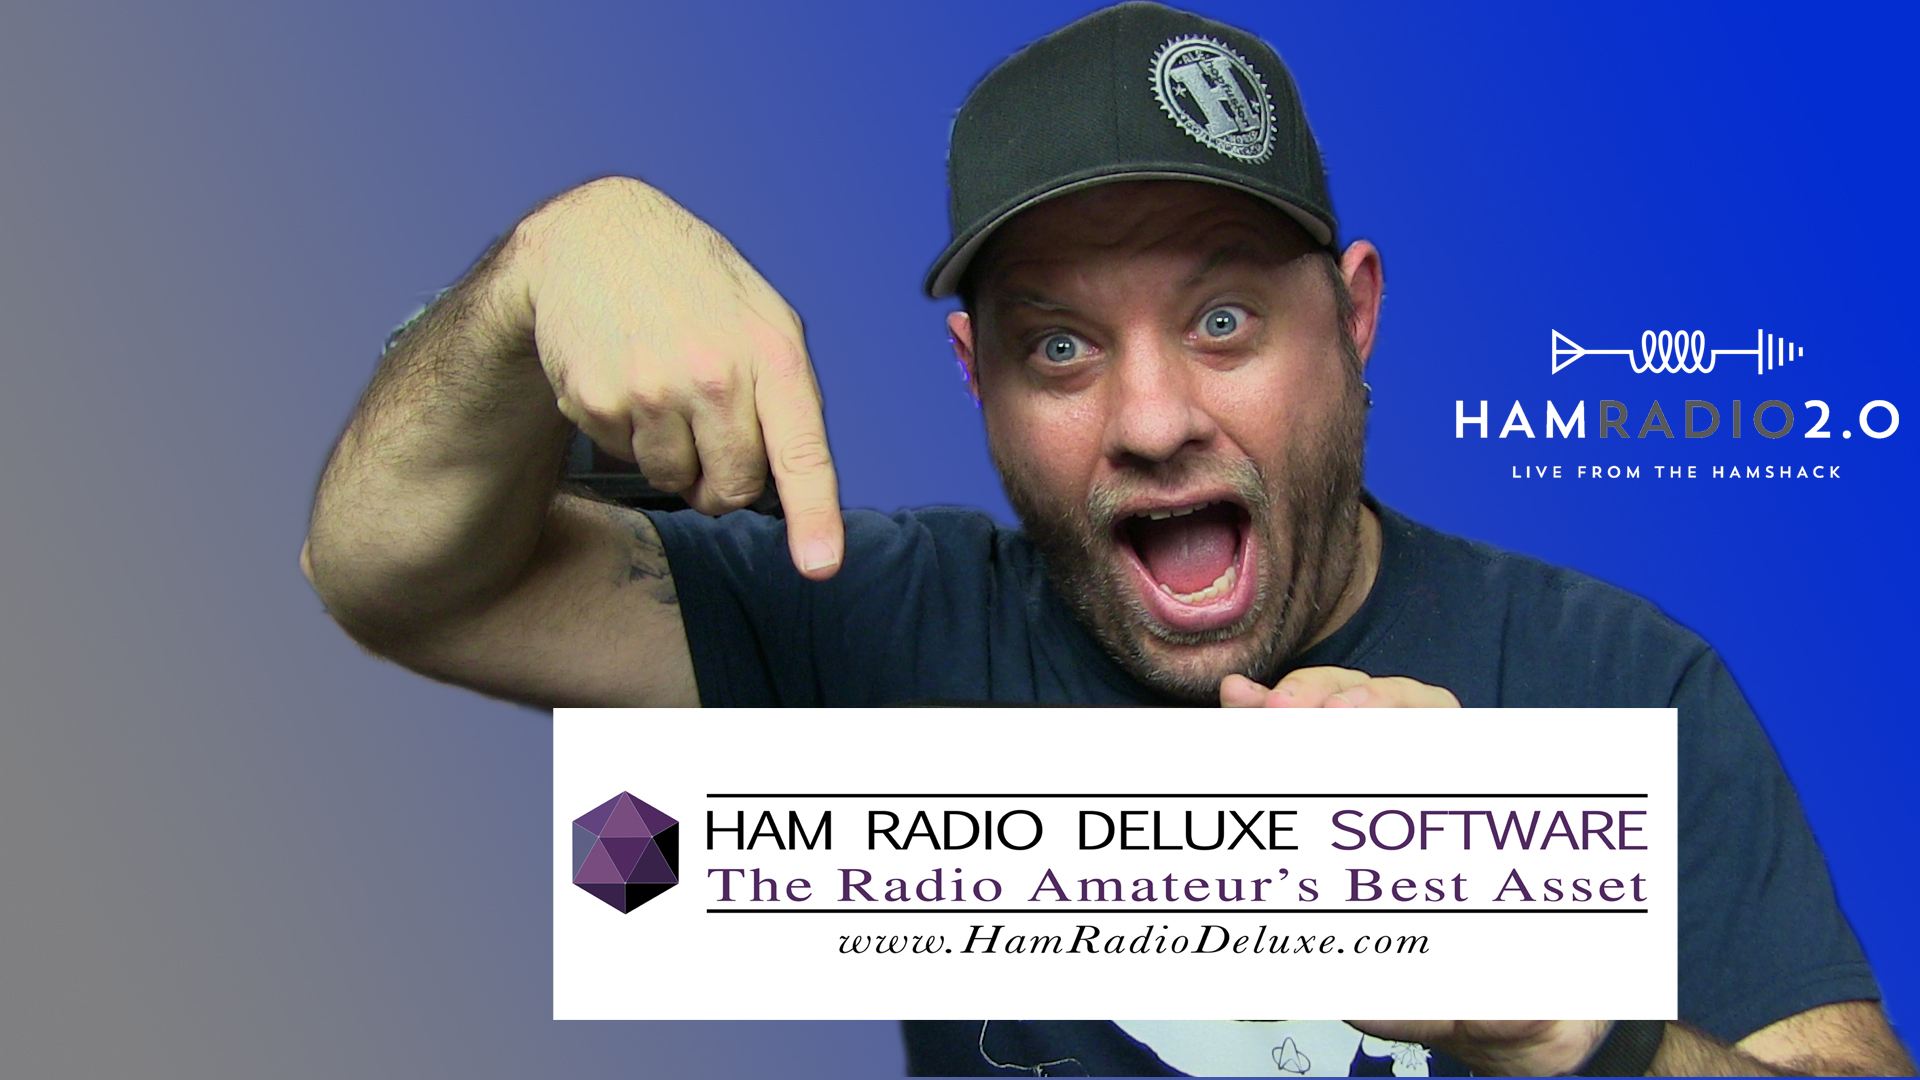 Episode 218: Ham Radio Deluxe Software from Hamcom 2019